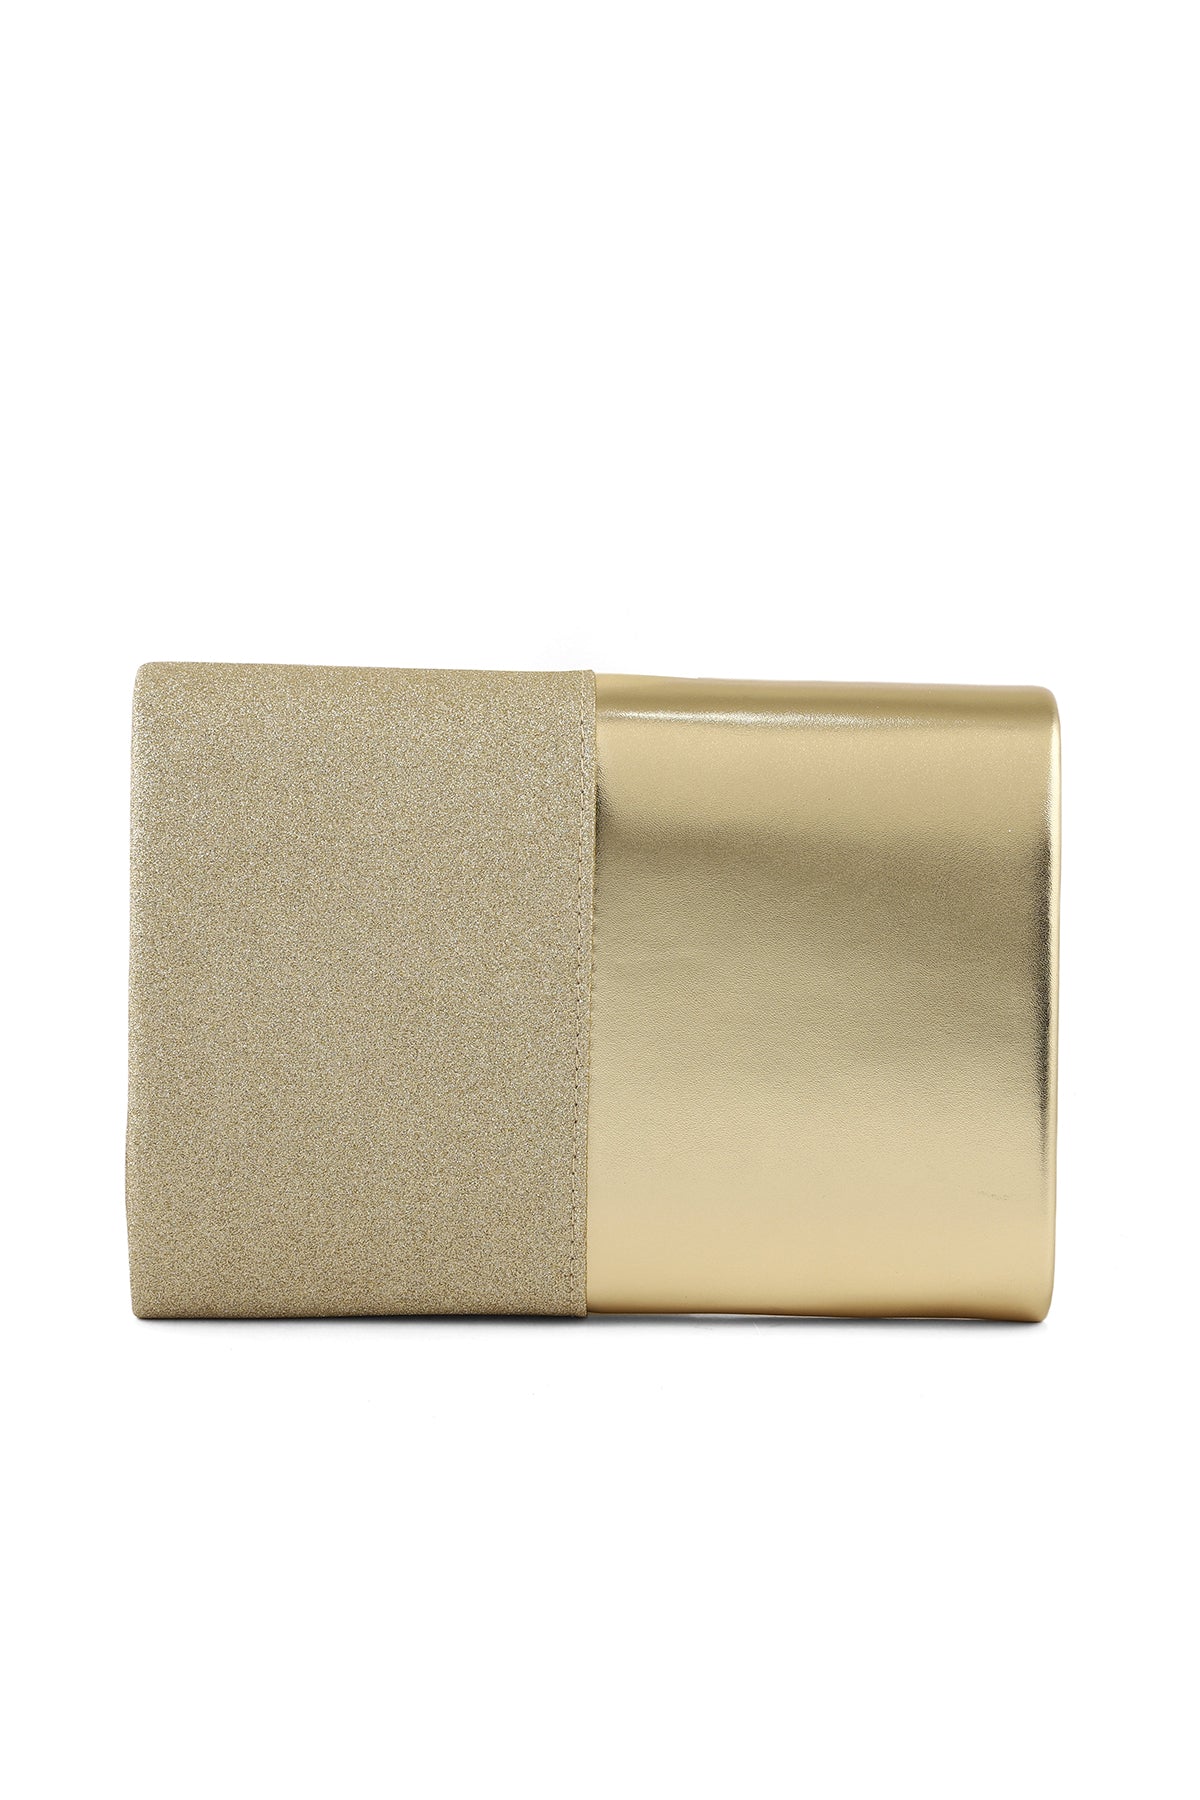 Flap Shoulder Bags B21584-Golden